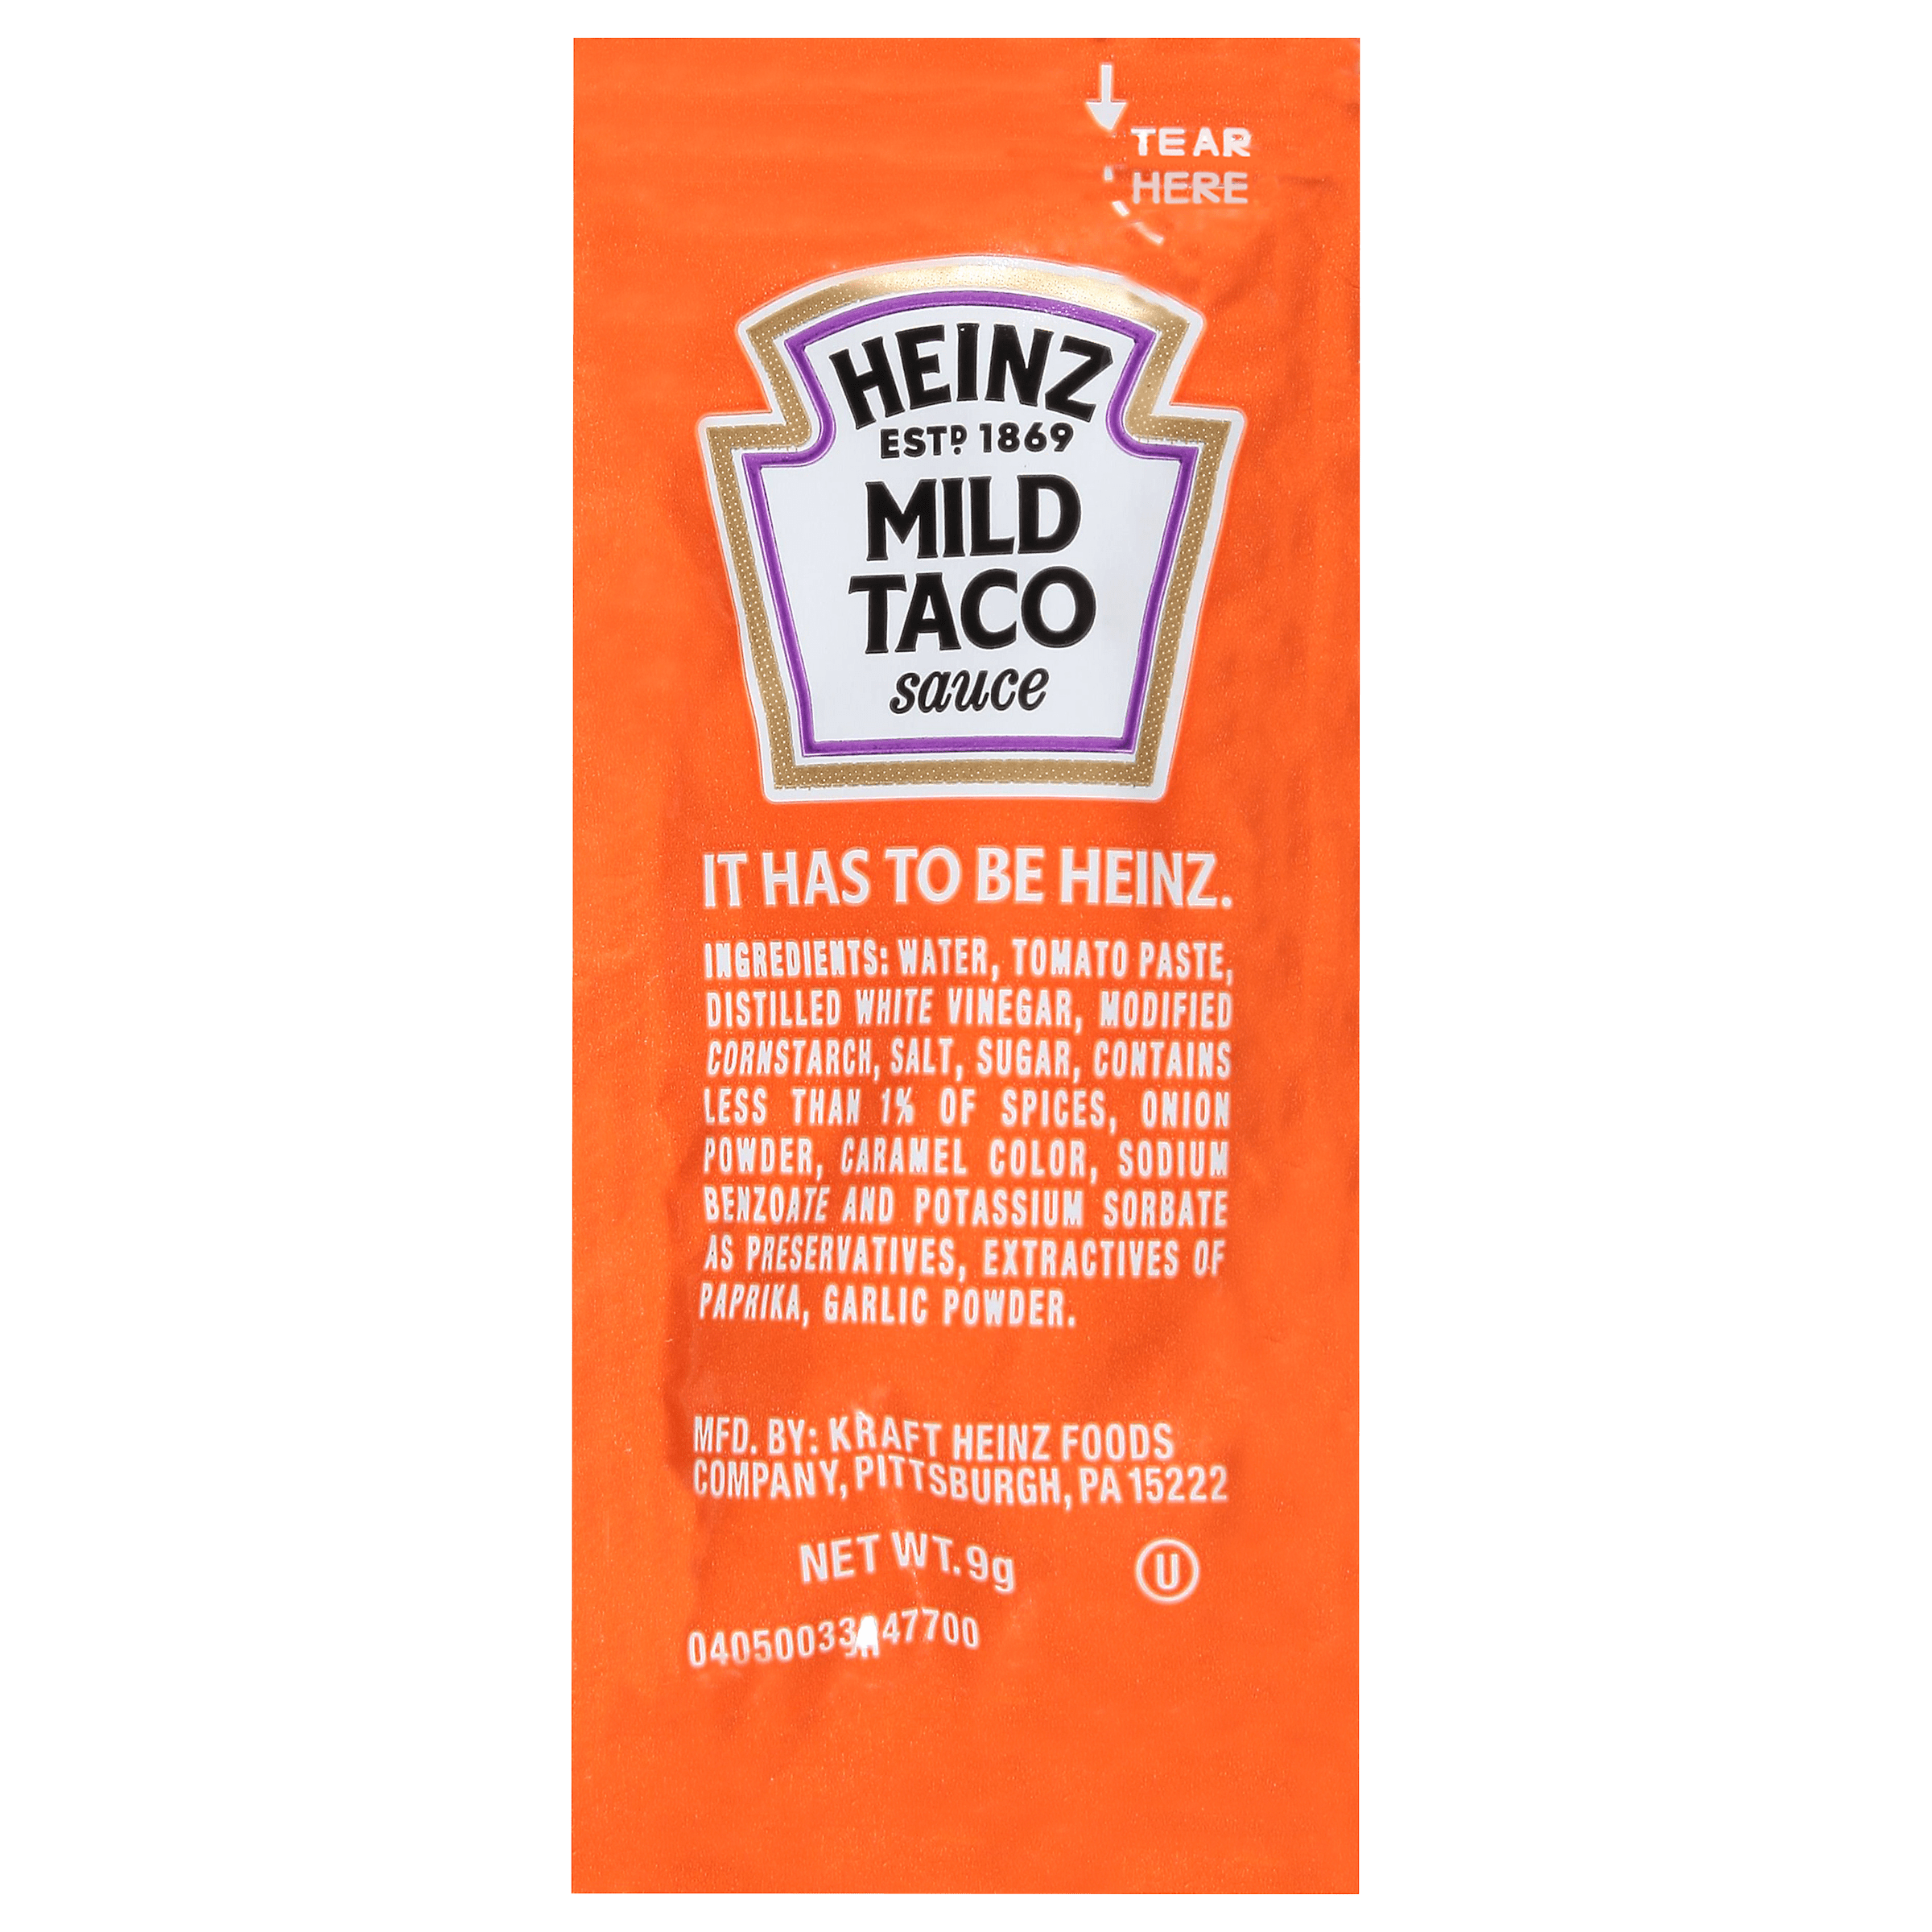 Single Serve Mild Taco Sauce